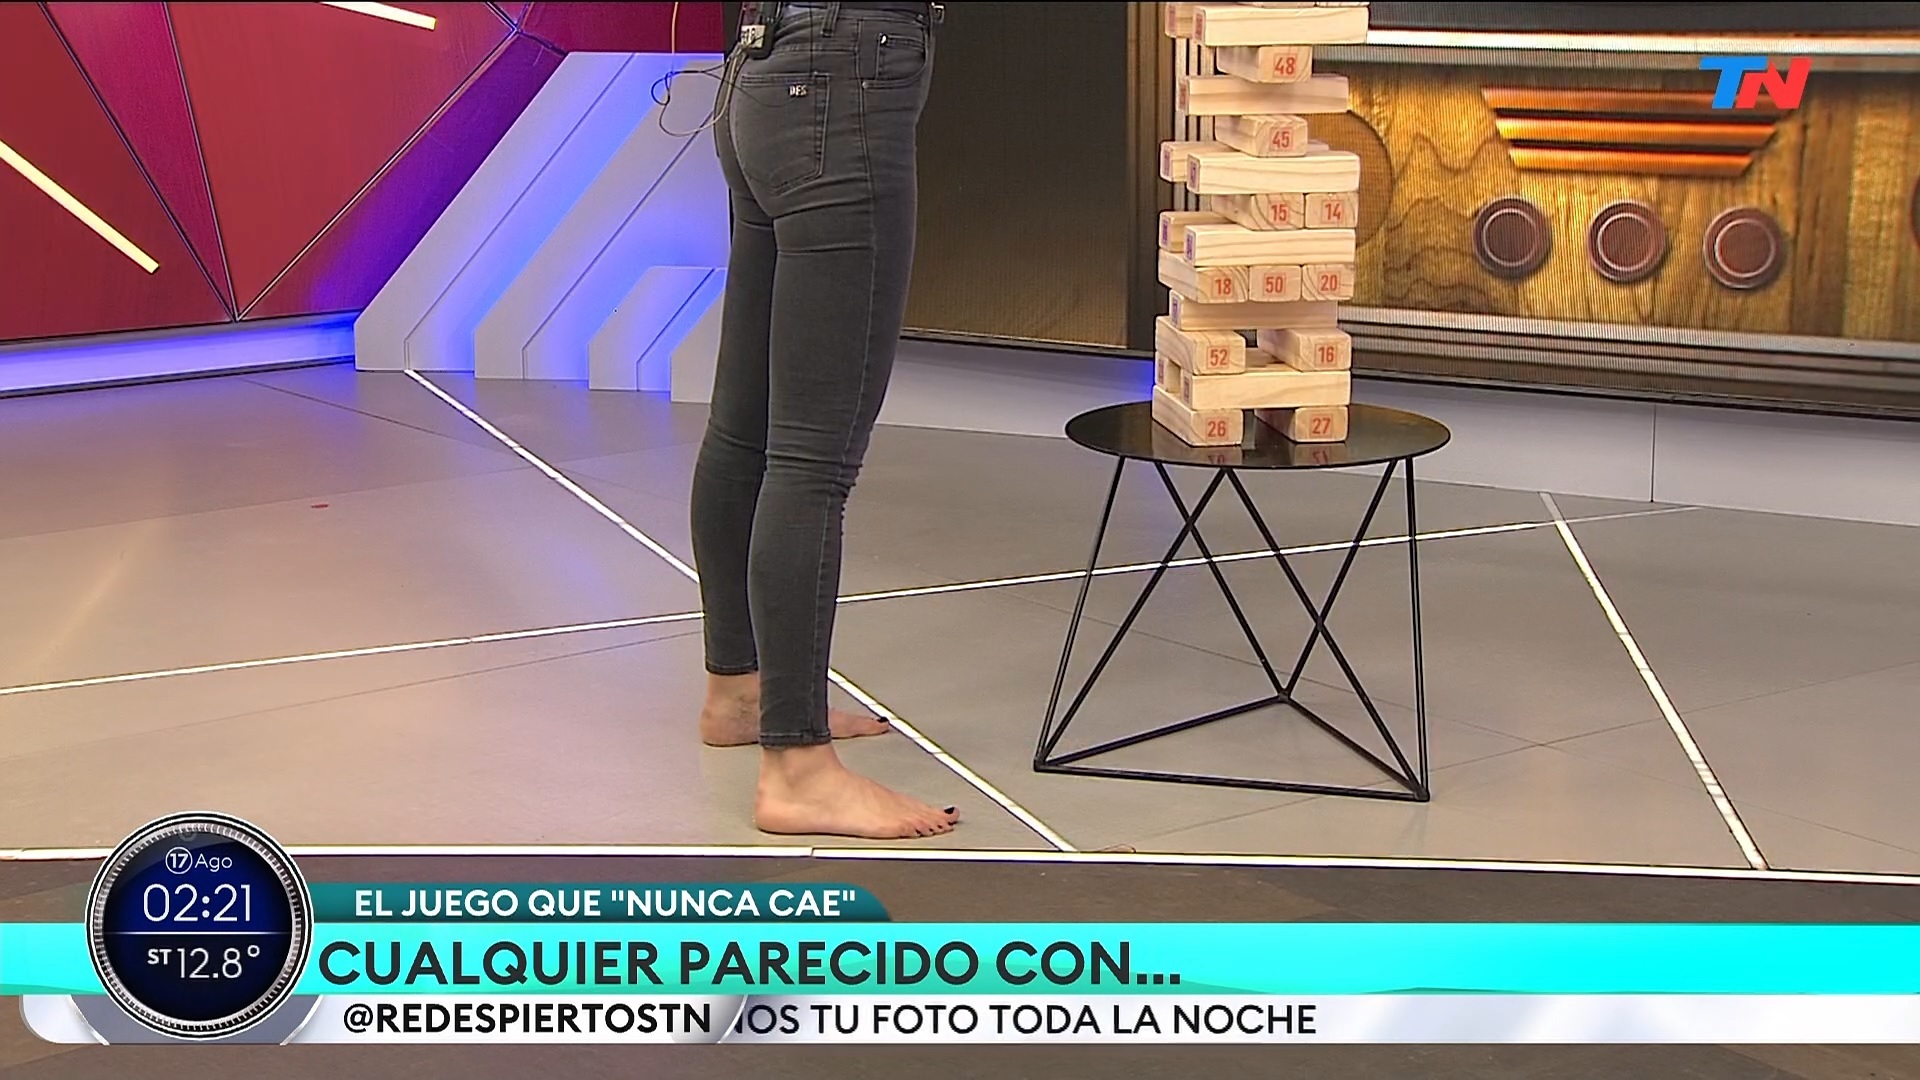 Eleonora Perez Caressi Feet